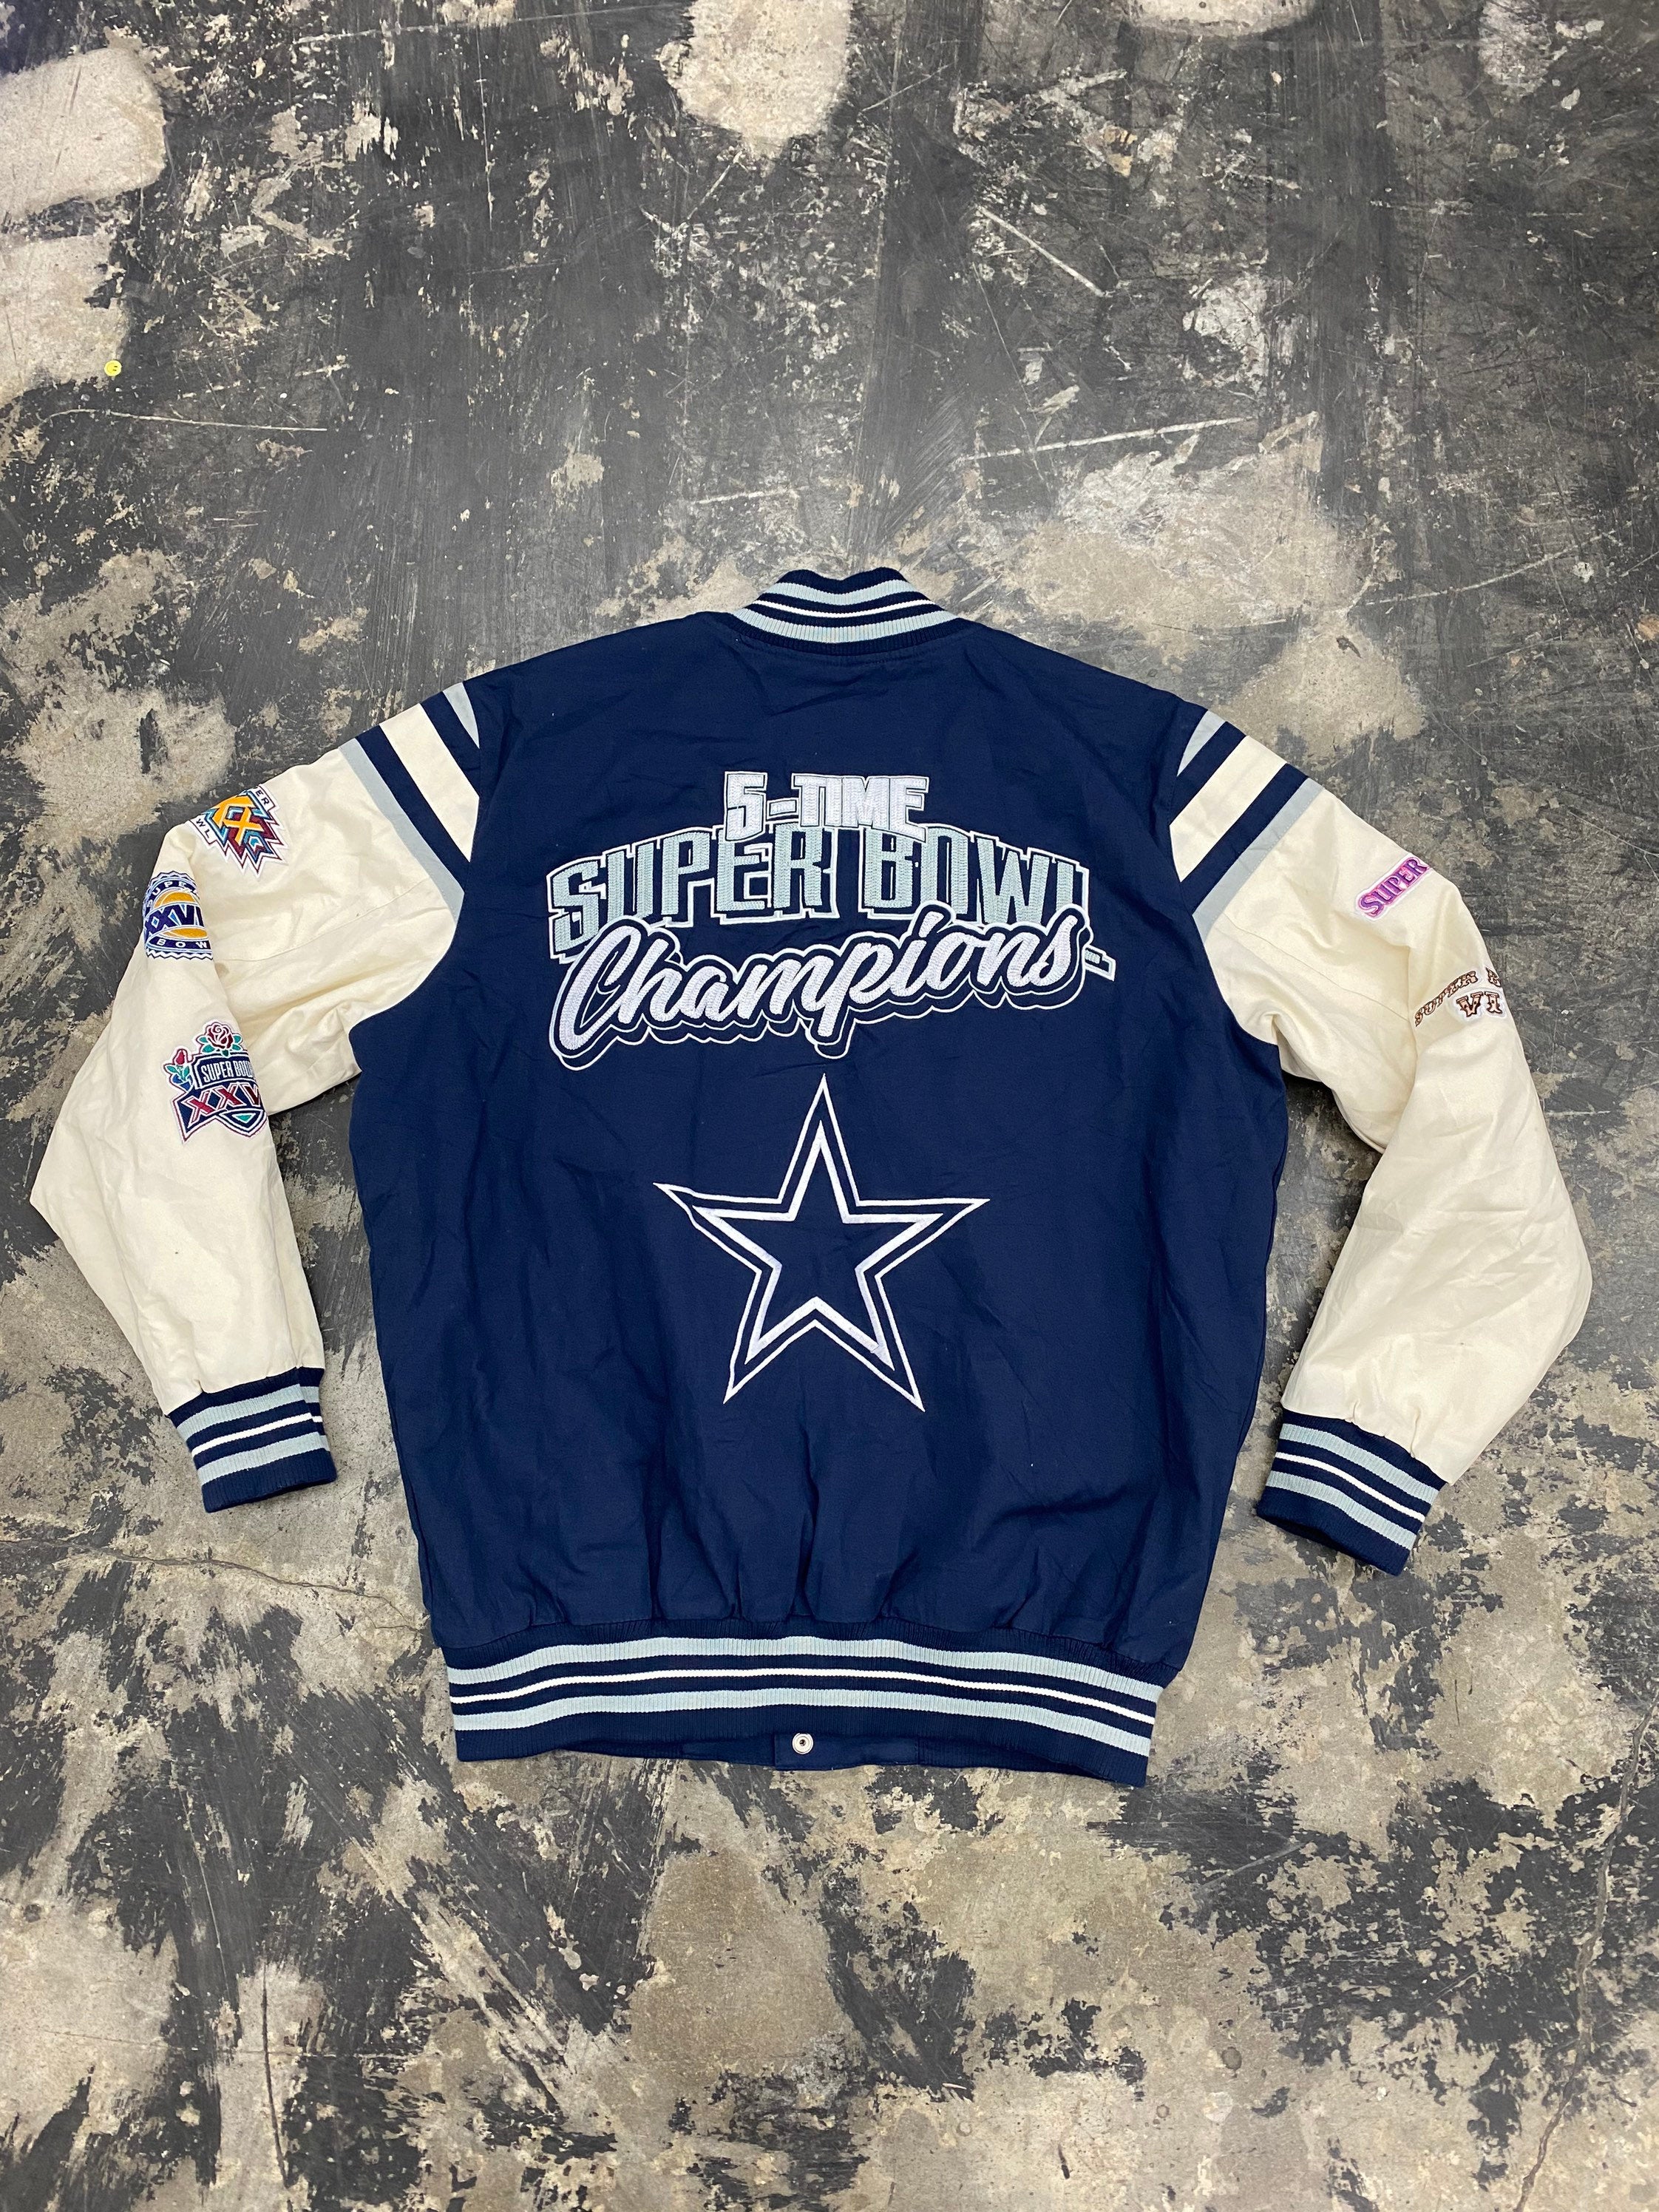 Football Jacket Super Bowl Champions Mens Outdoor Sports Lightweight Jackets Coat S-5xl - Dallas - Cowboys, Men's, Size: 2XL, Blue